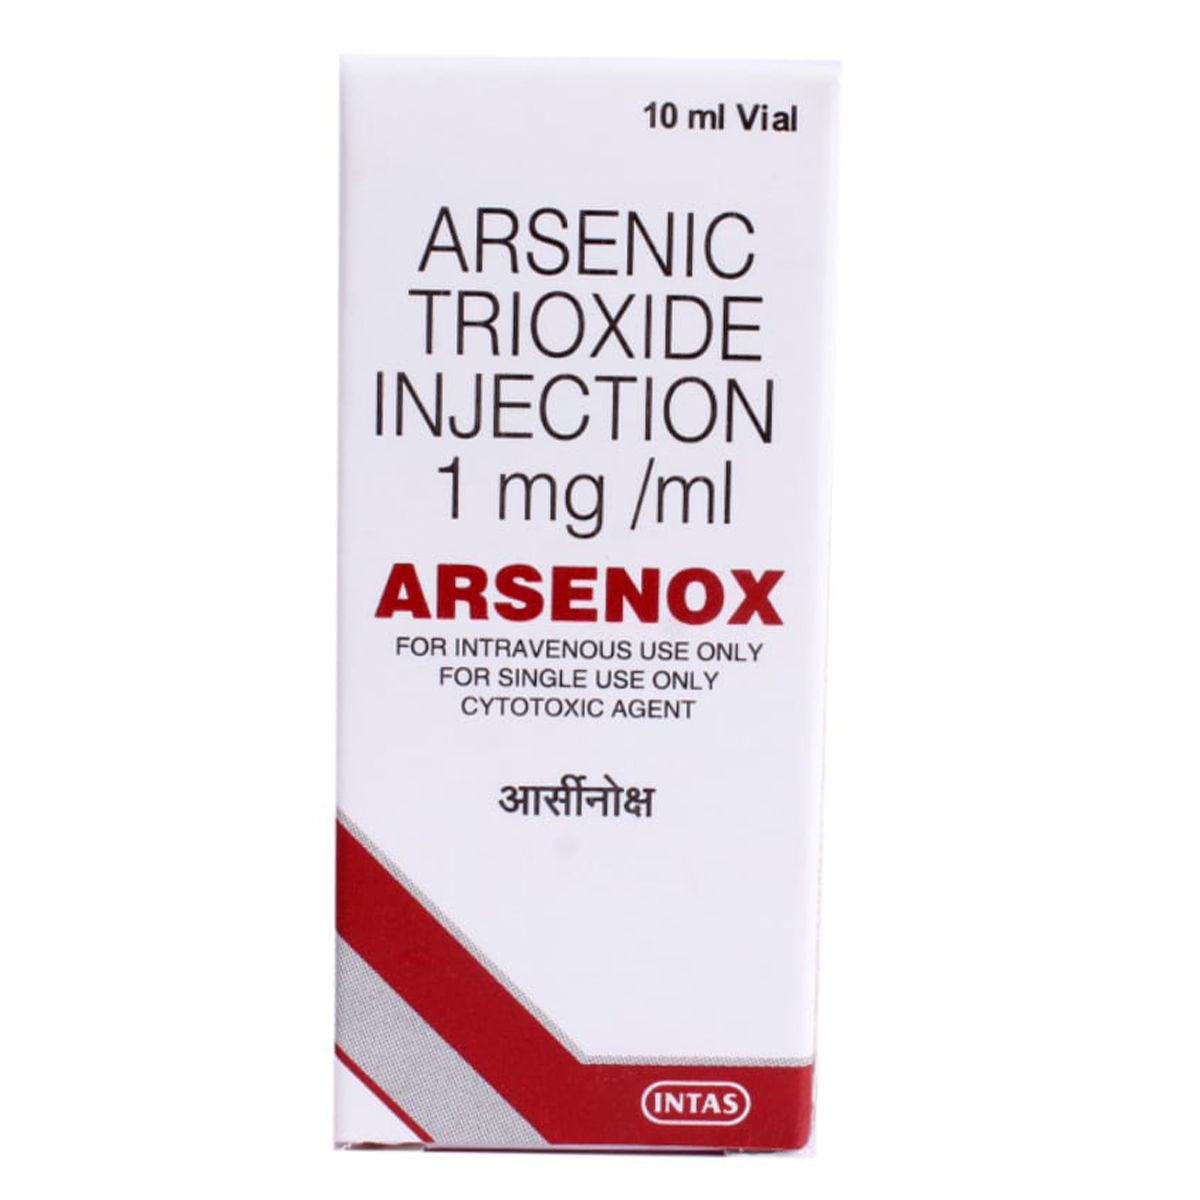 Buy Arsenox Injection 10 ml Online